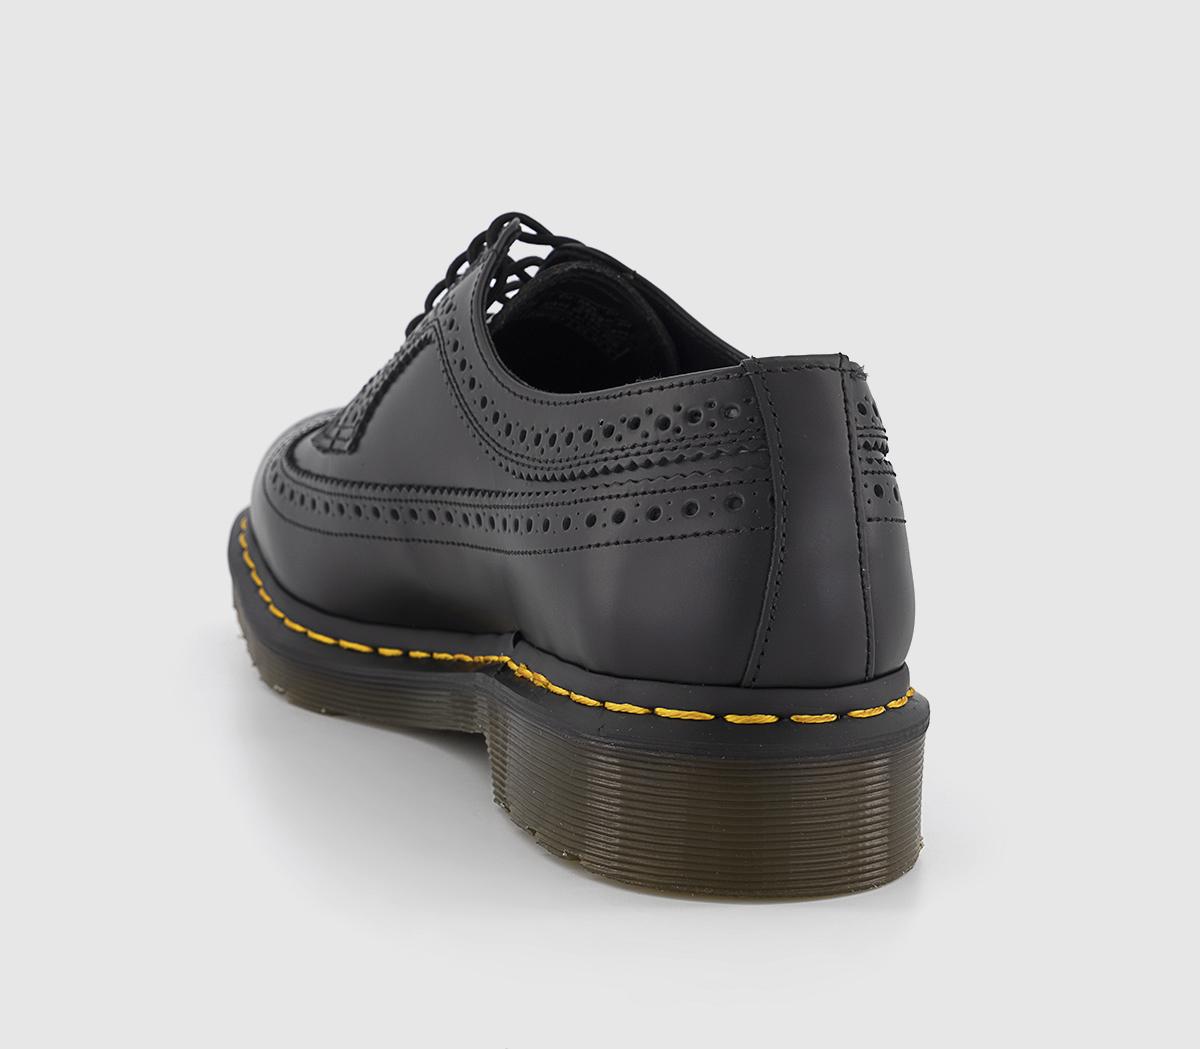 Dr. Martens 3989 Brogues Black - Men’s Smart Shoes